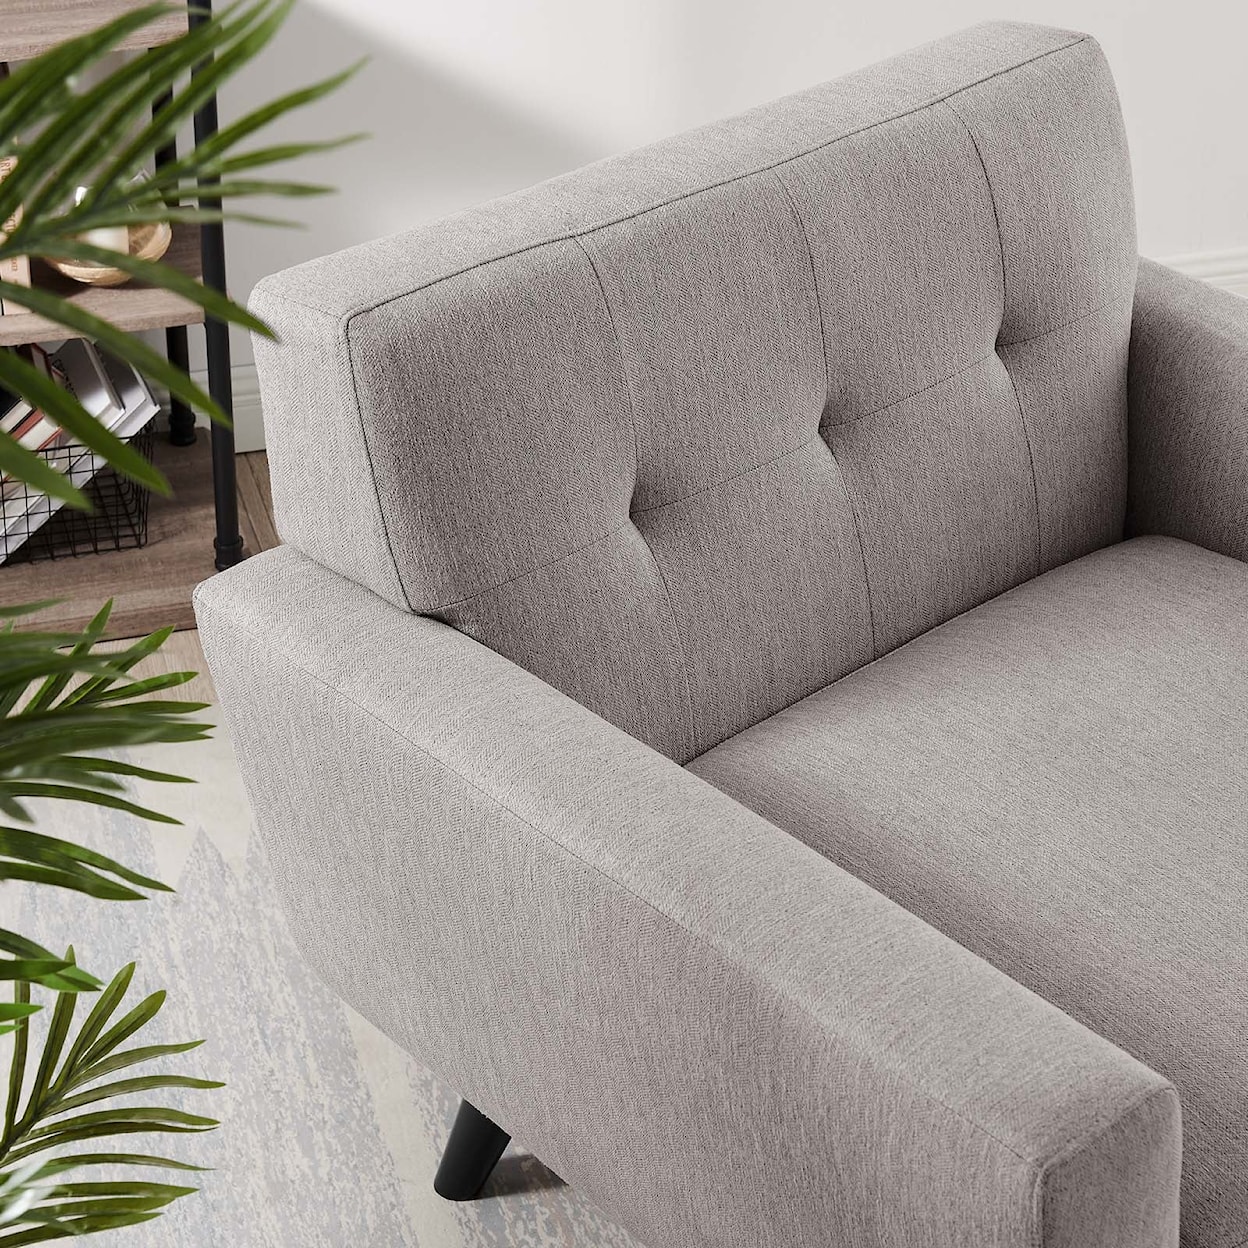 Modway Engage Engage Herringbone Fabric Armchair